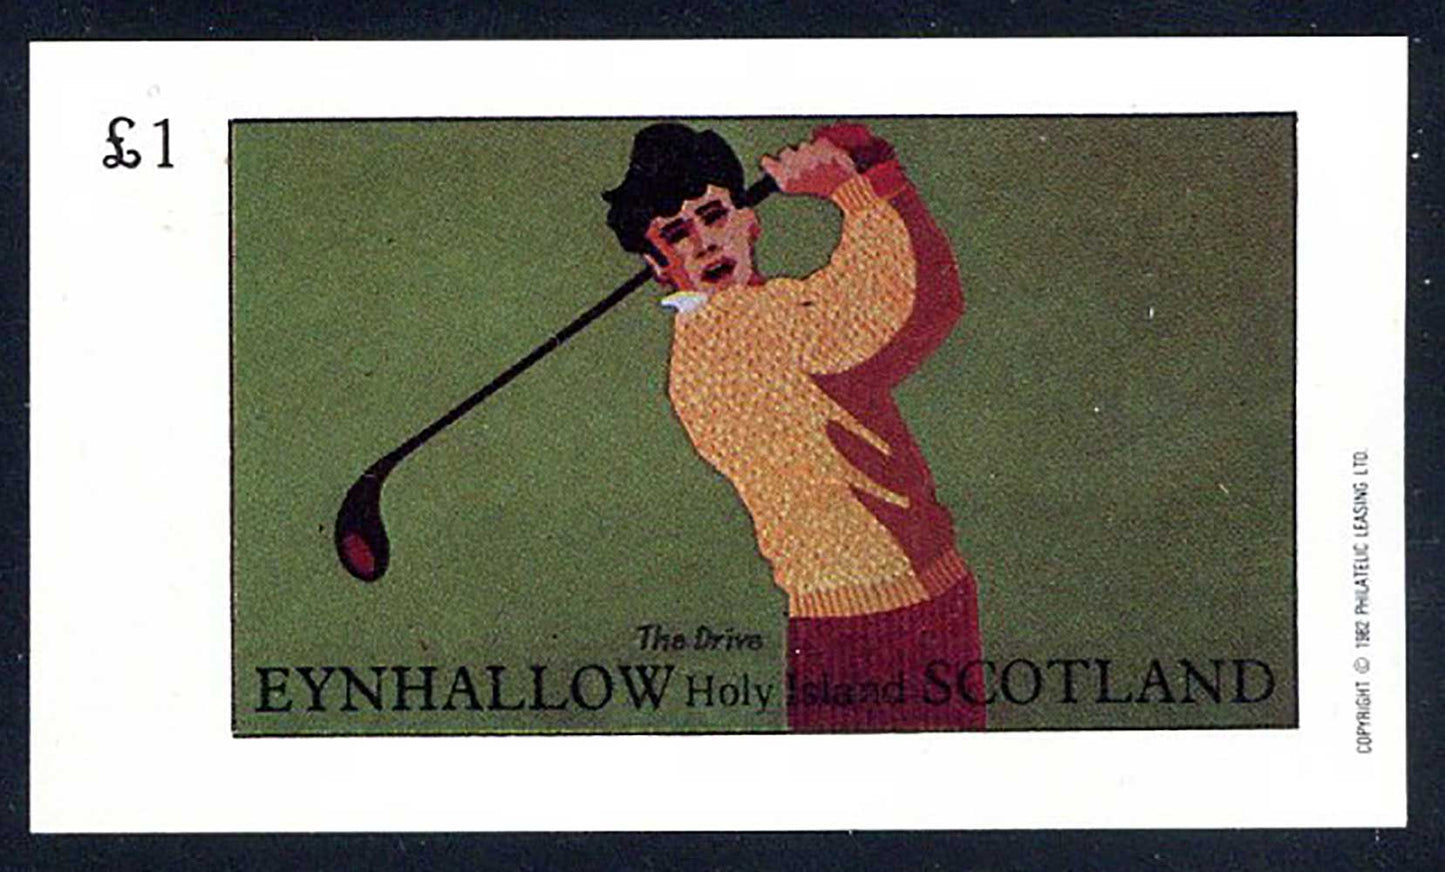 Eynhallow Golf £1